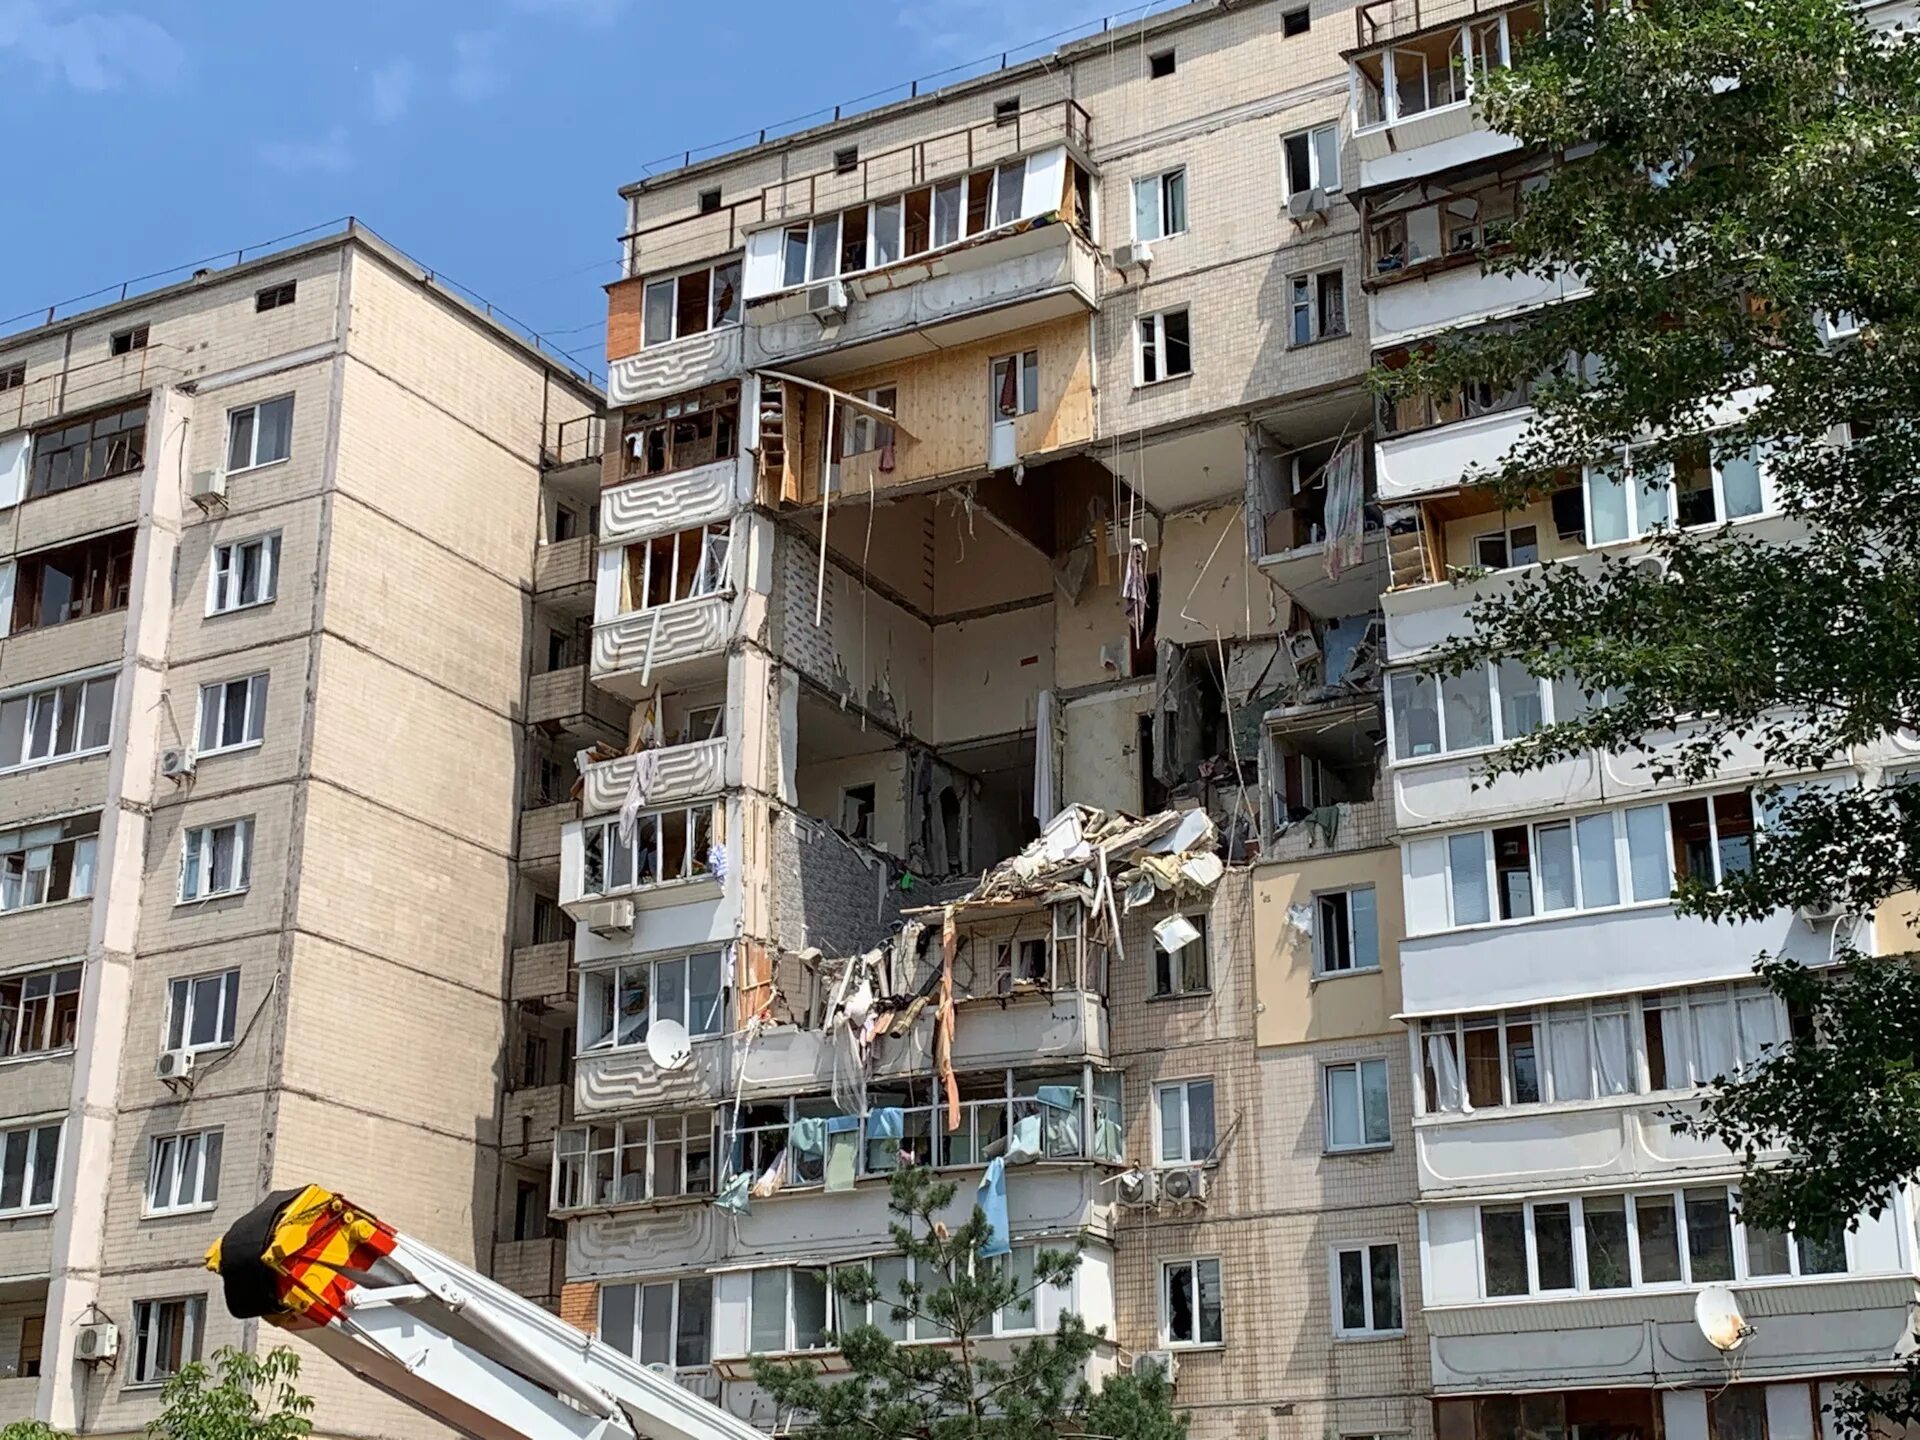 Квартира разрушение. Разрушенная многоэтажка квартира. Взрыв дома. Взорванный дом в Киеве.